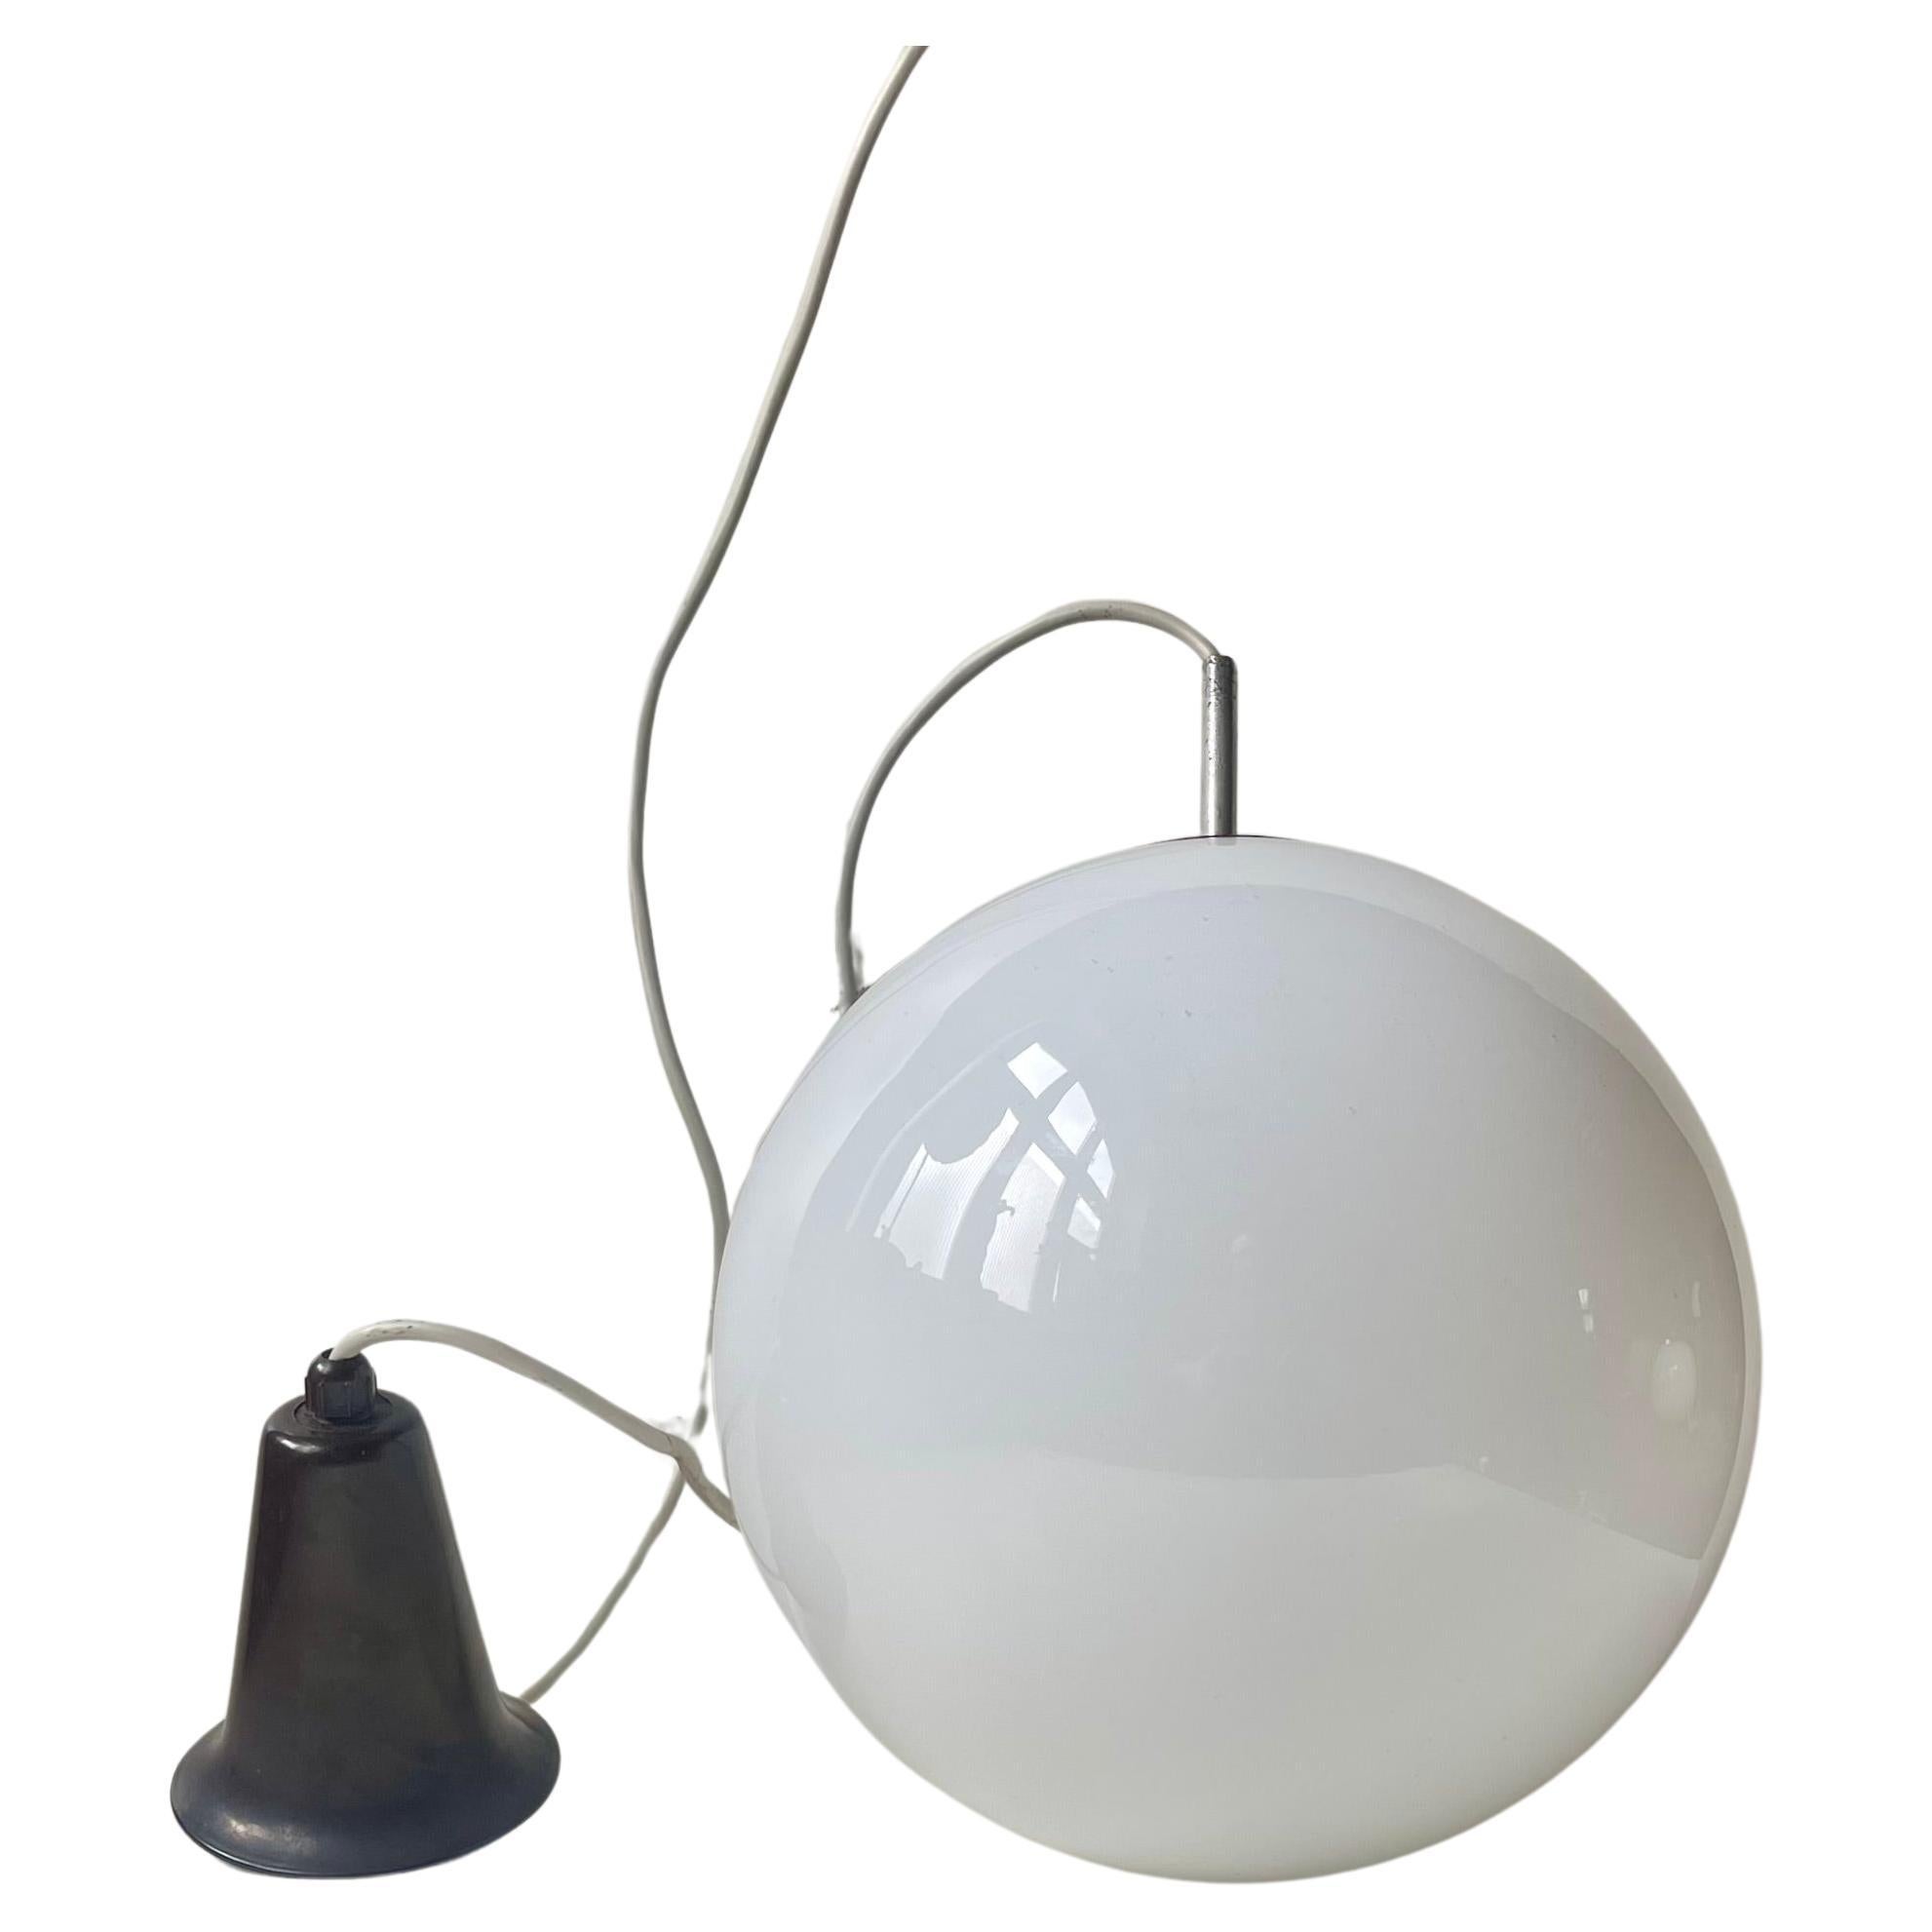 Lampada a sospensione a globo funzionalista Louis Poulsen in vetro opalino bianco, anni '30 in vendita